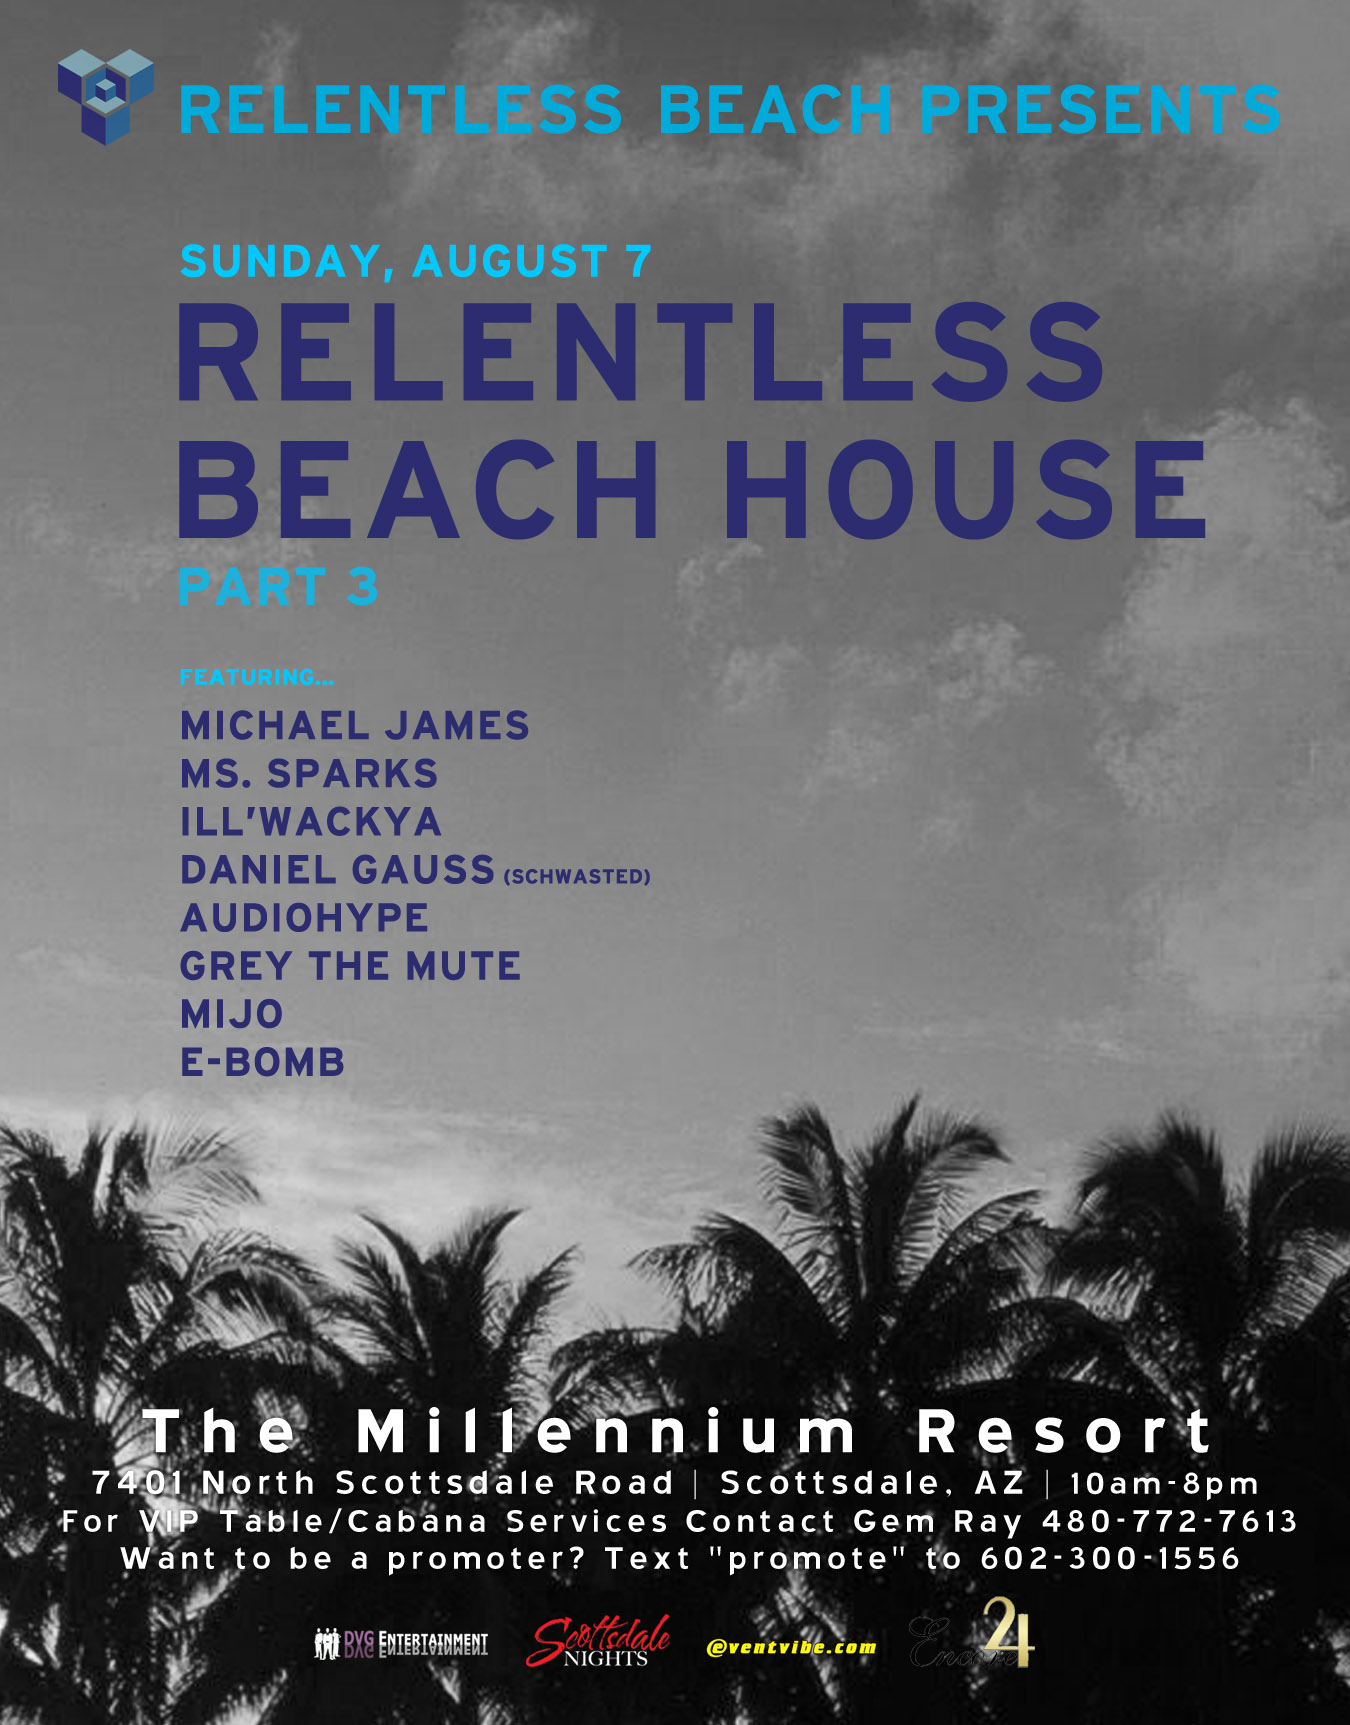 Relentless Beach House vol.3 on 08/07/11